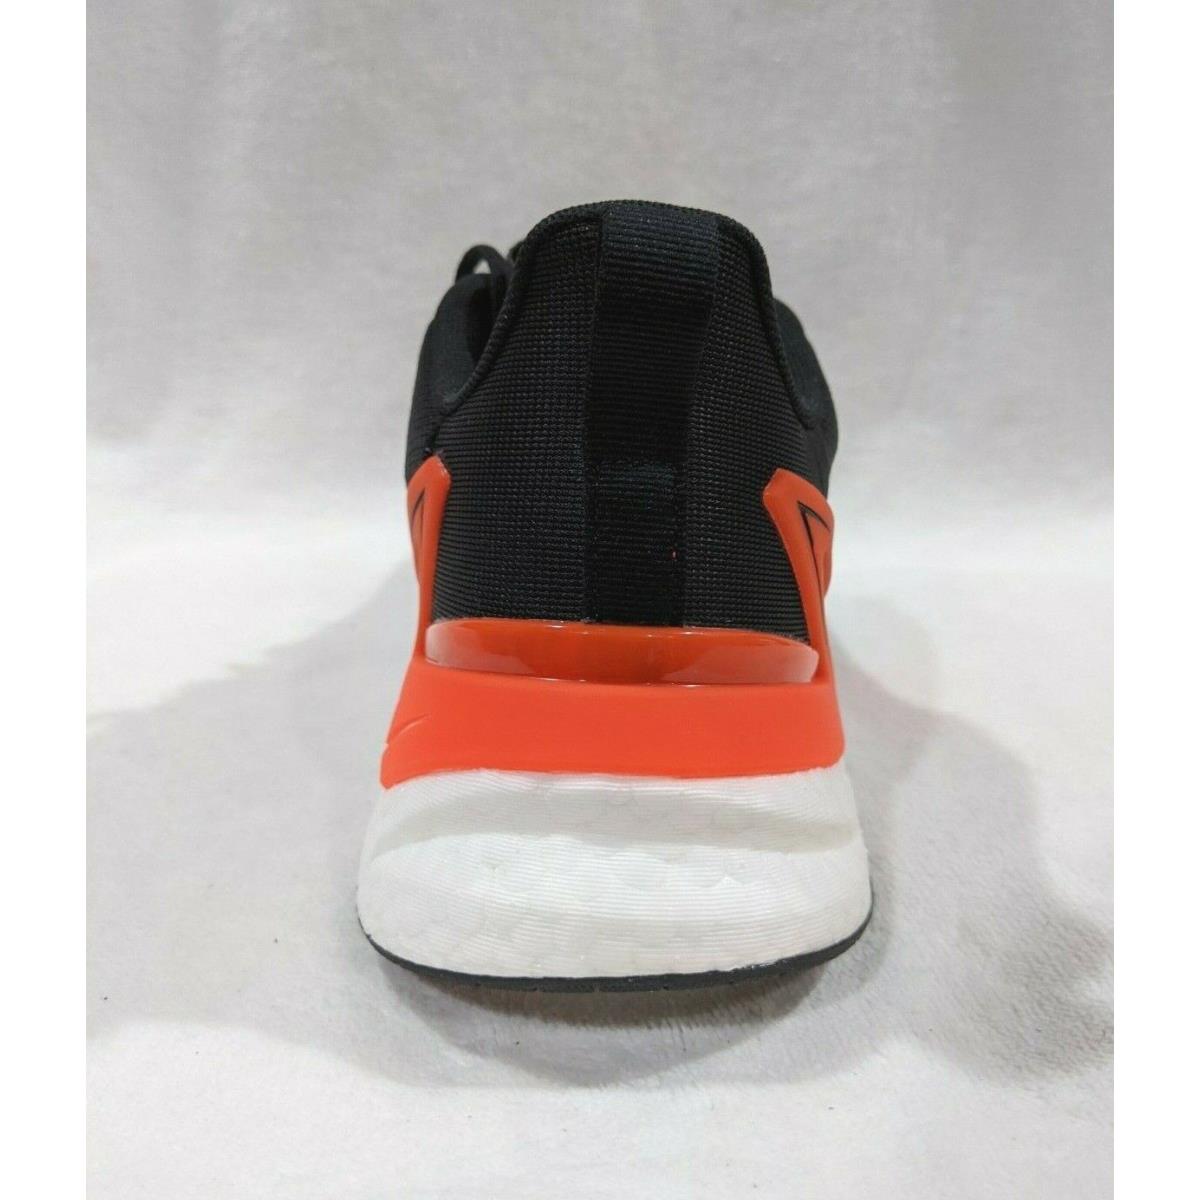 Adidas shoes Response Super Boost - Black , Orange 4